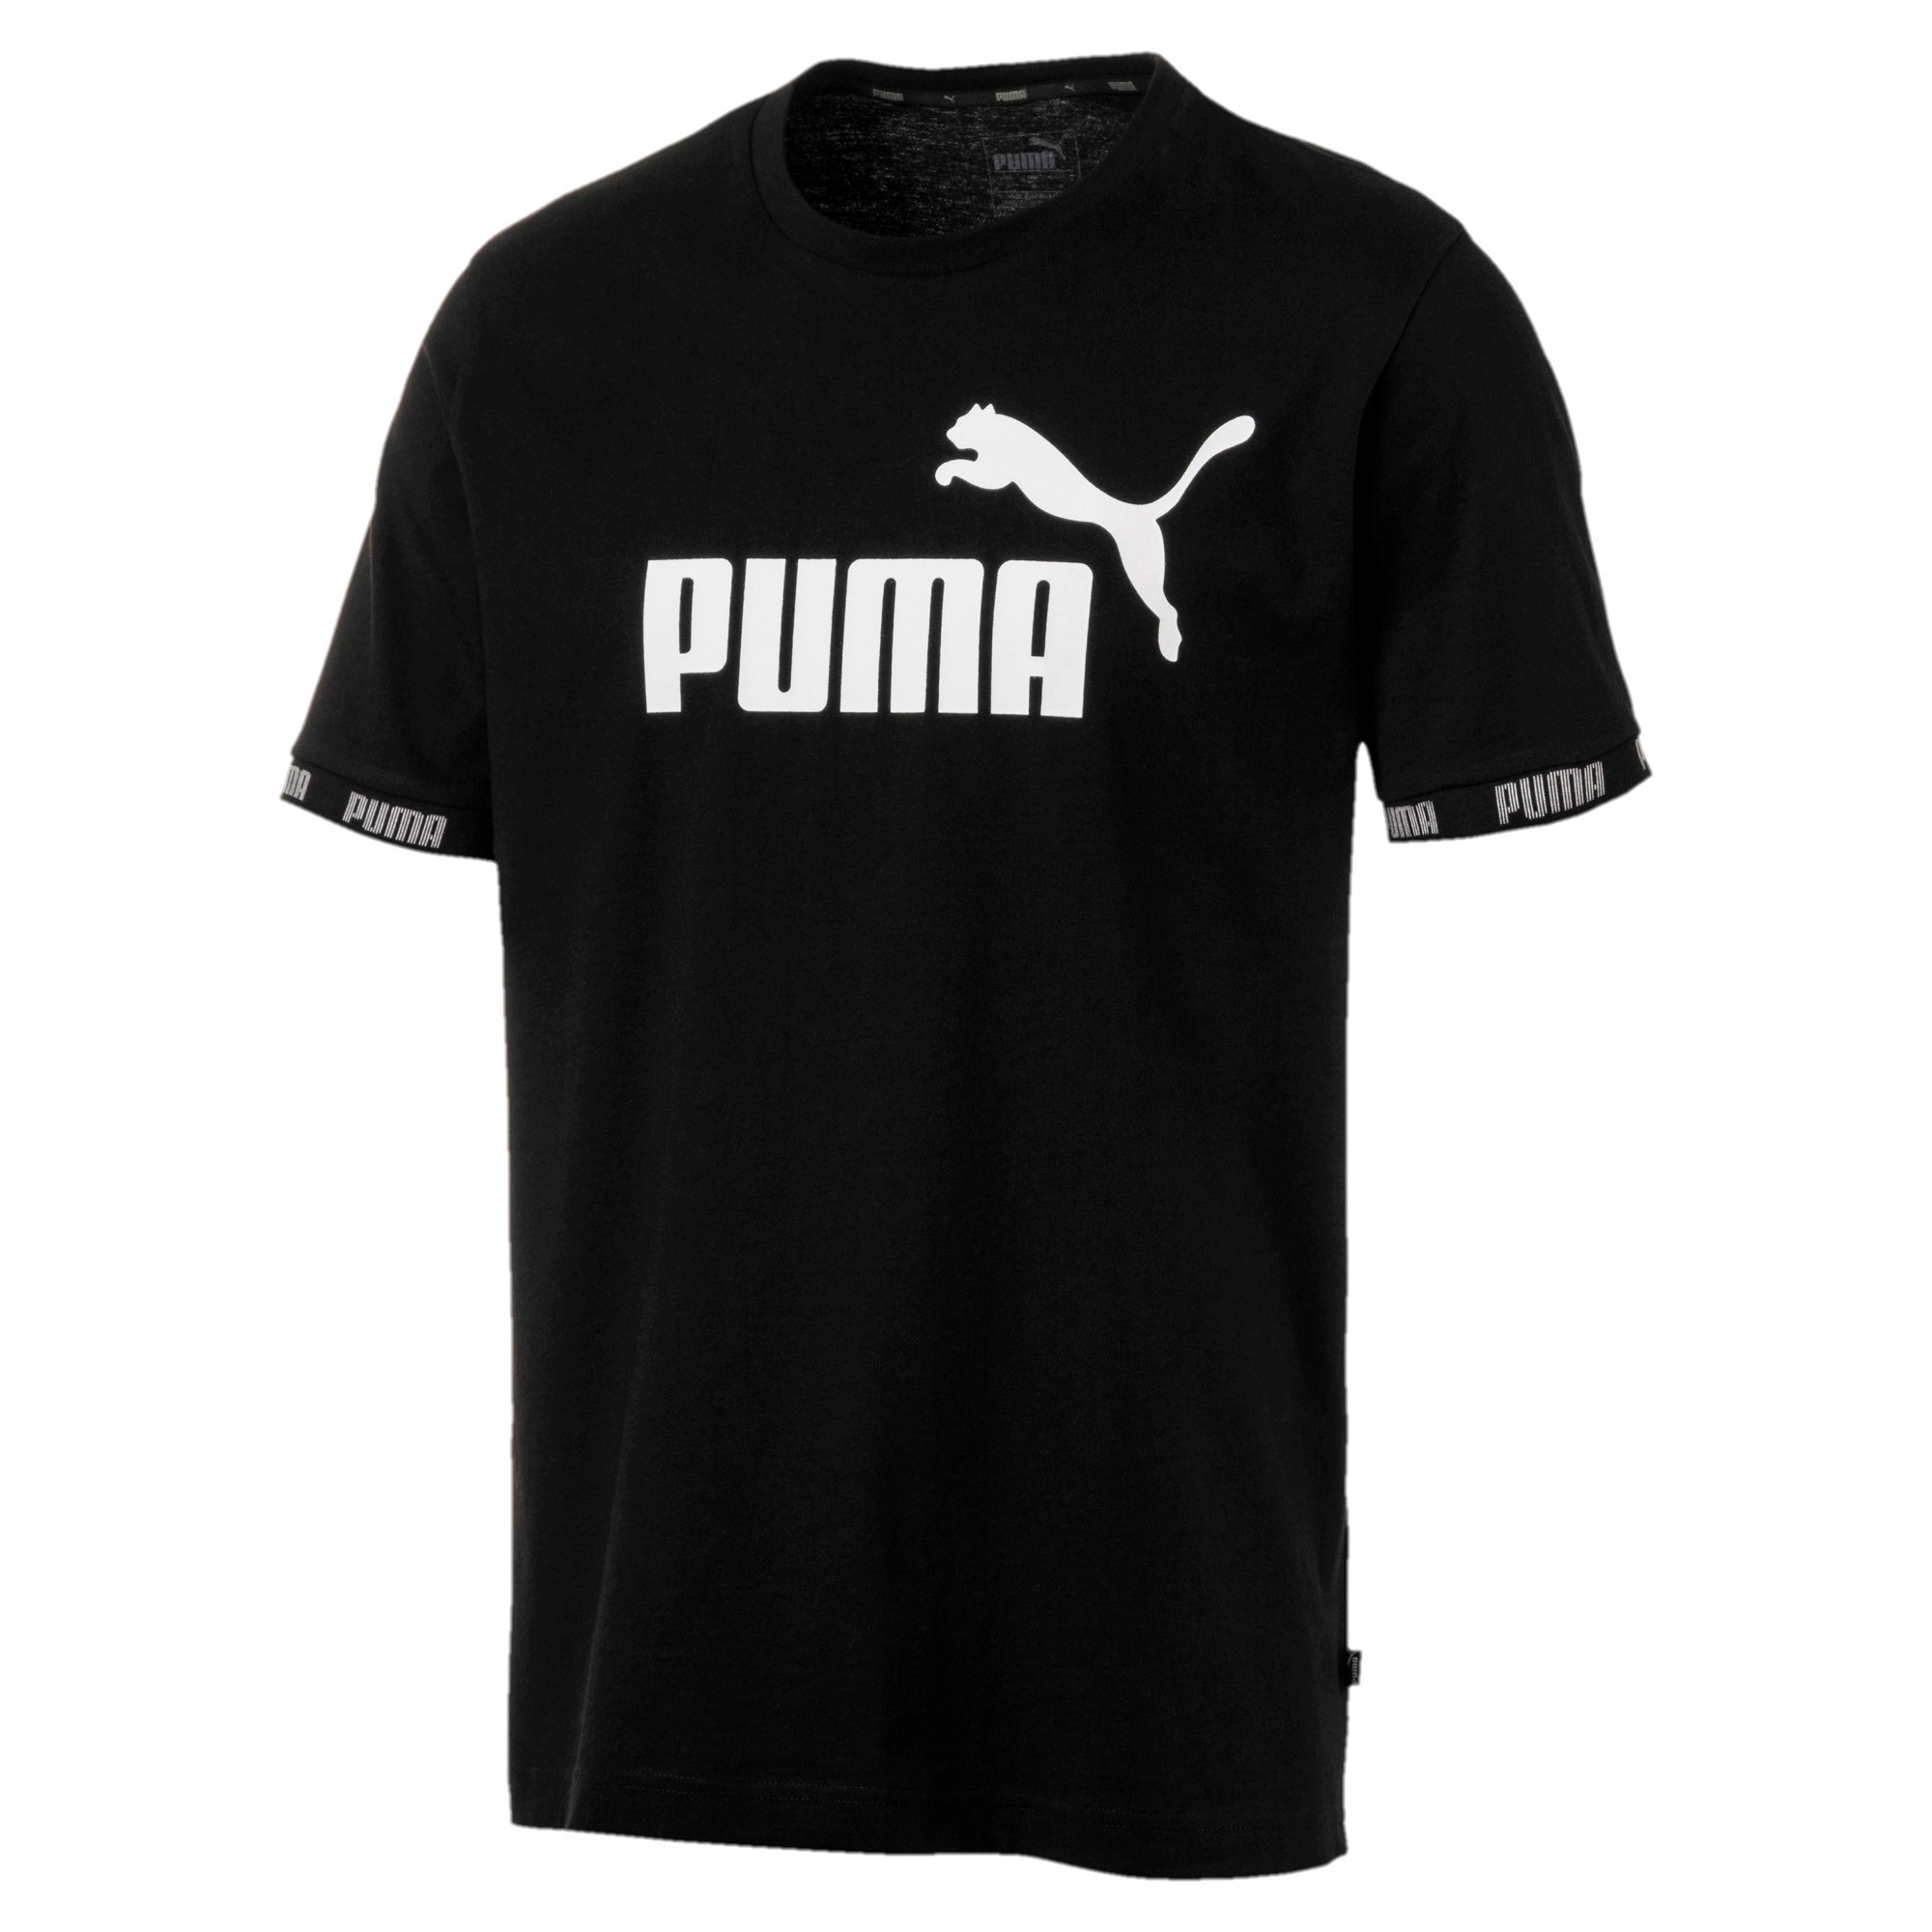 PUMA Herren Amplified Big Logo Tee T-Shirt schwarz 854242 01